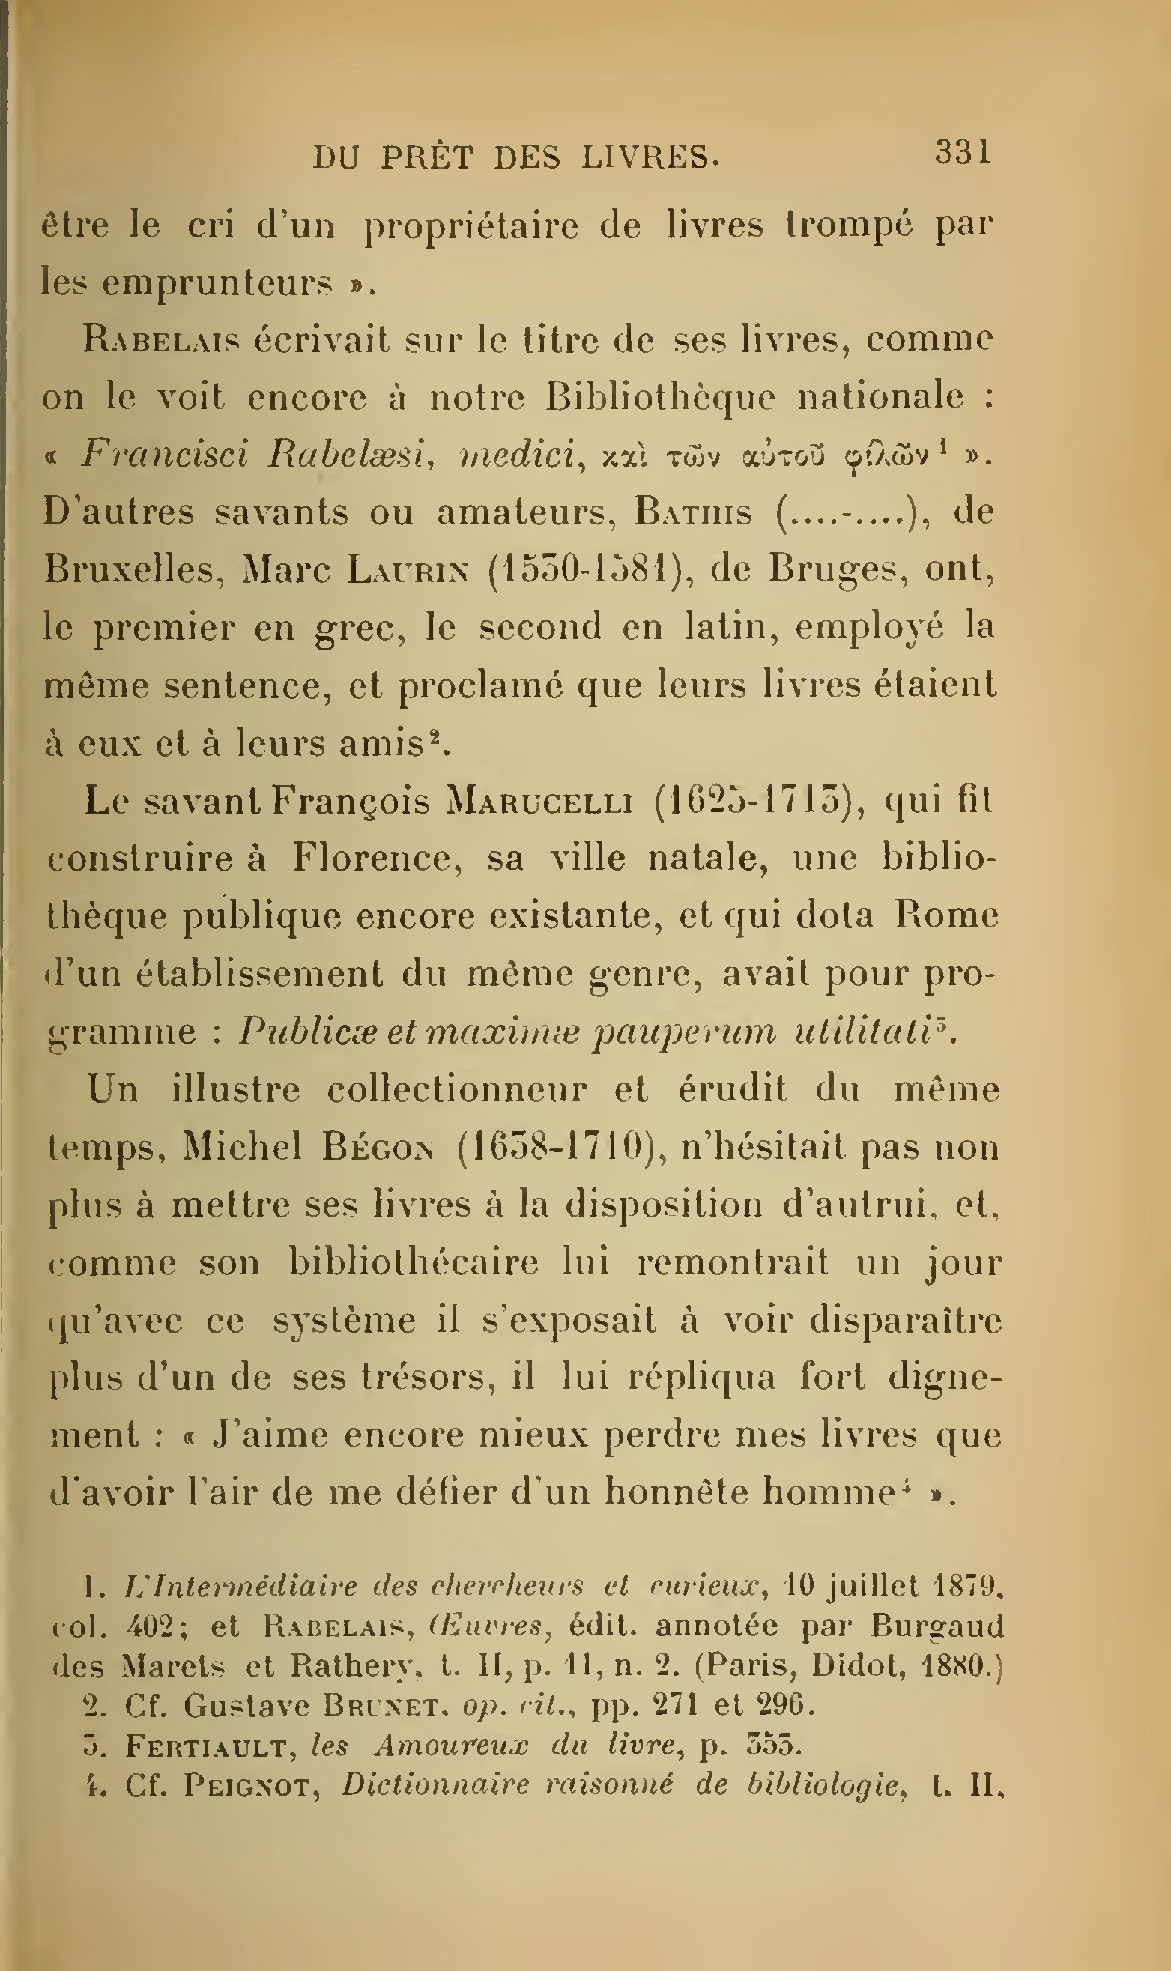 Albert Cim, Le Livre, t. II, p. 331.